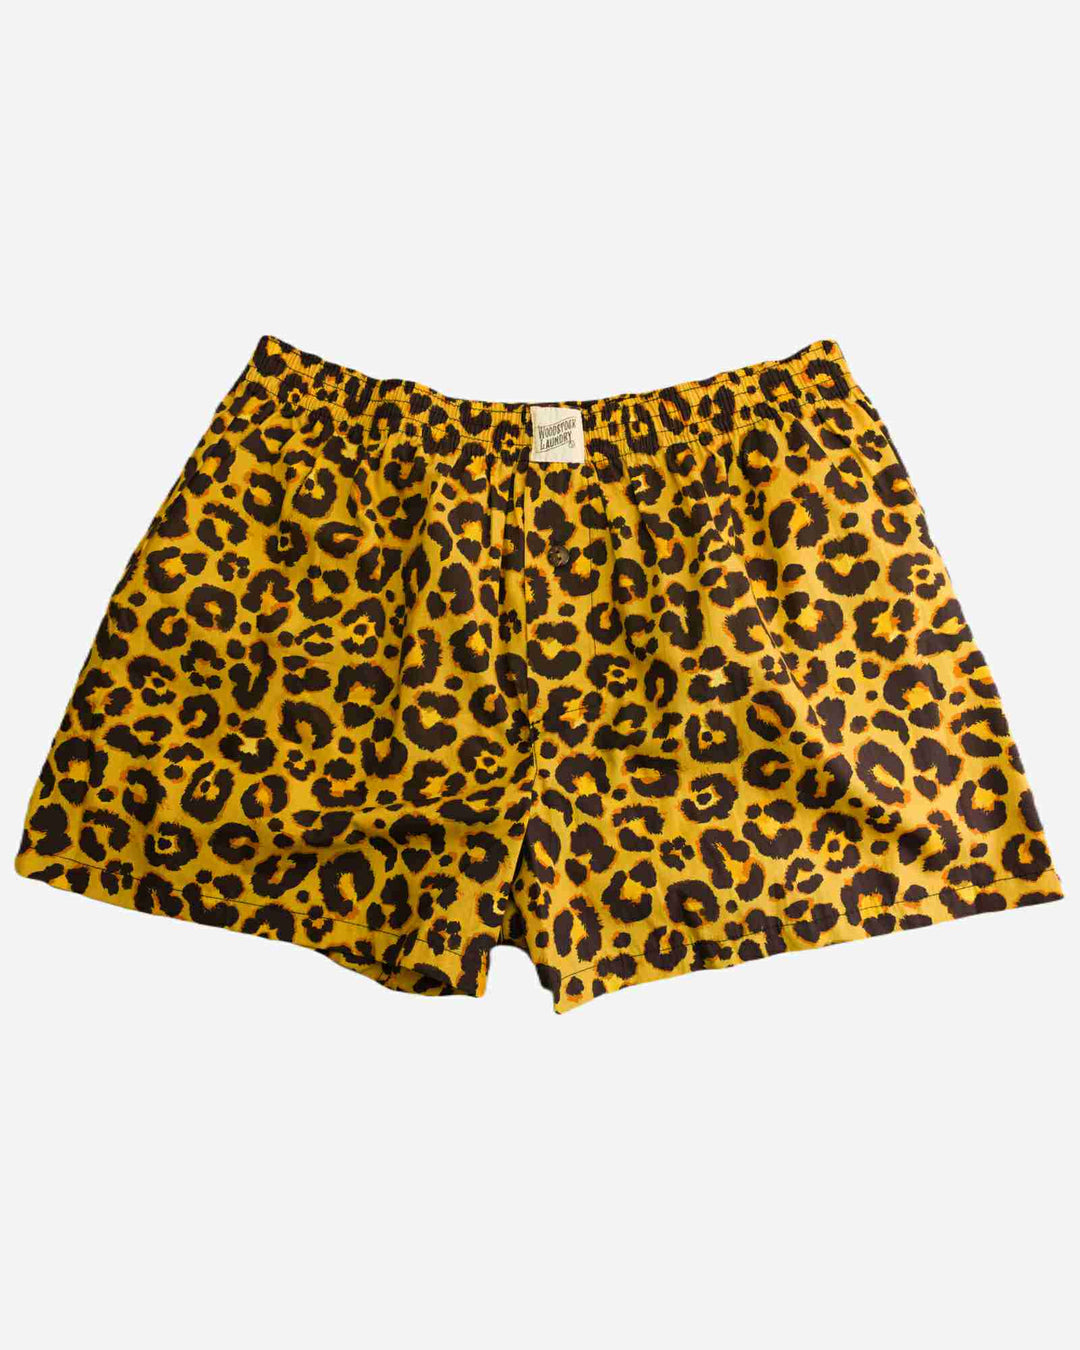 Mens boxer shorts - leopard skin